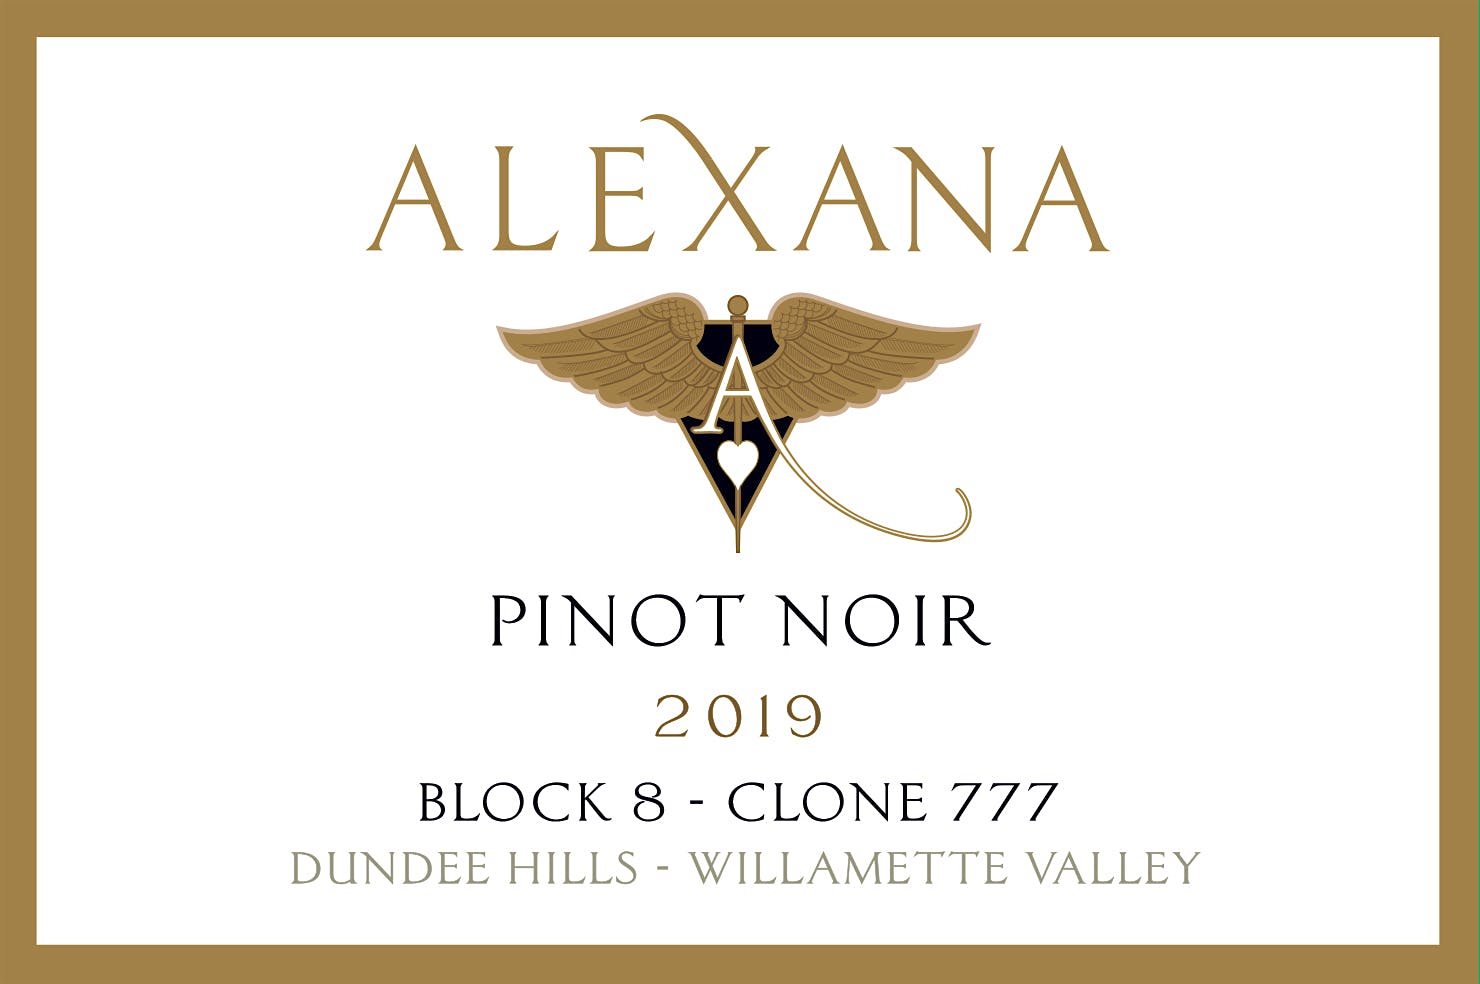 Label for Alexana